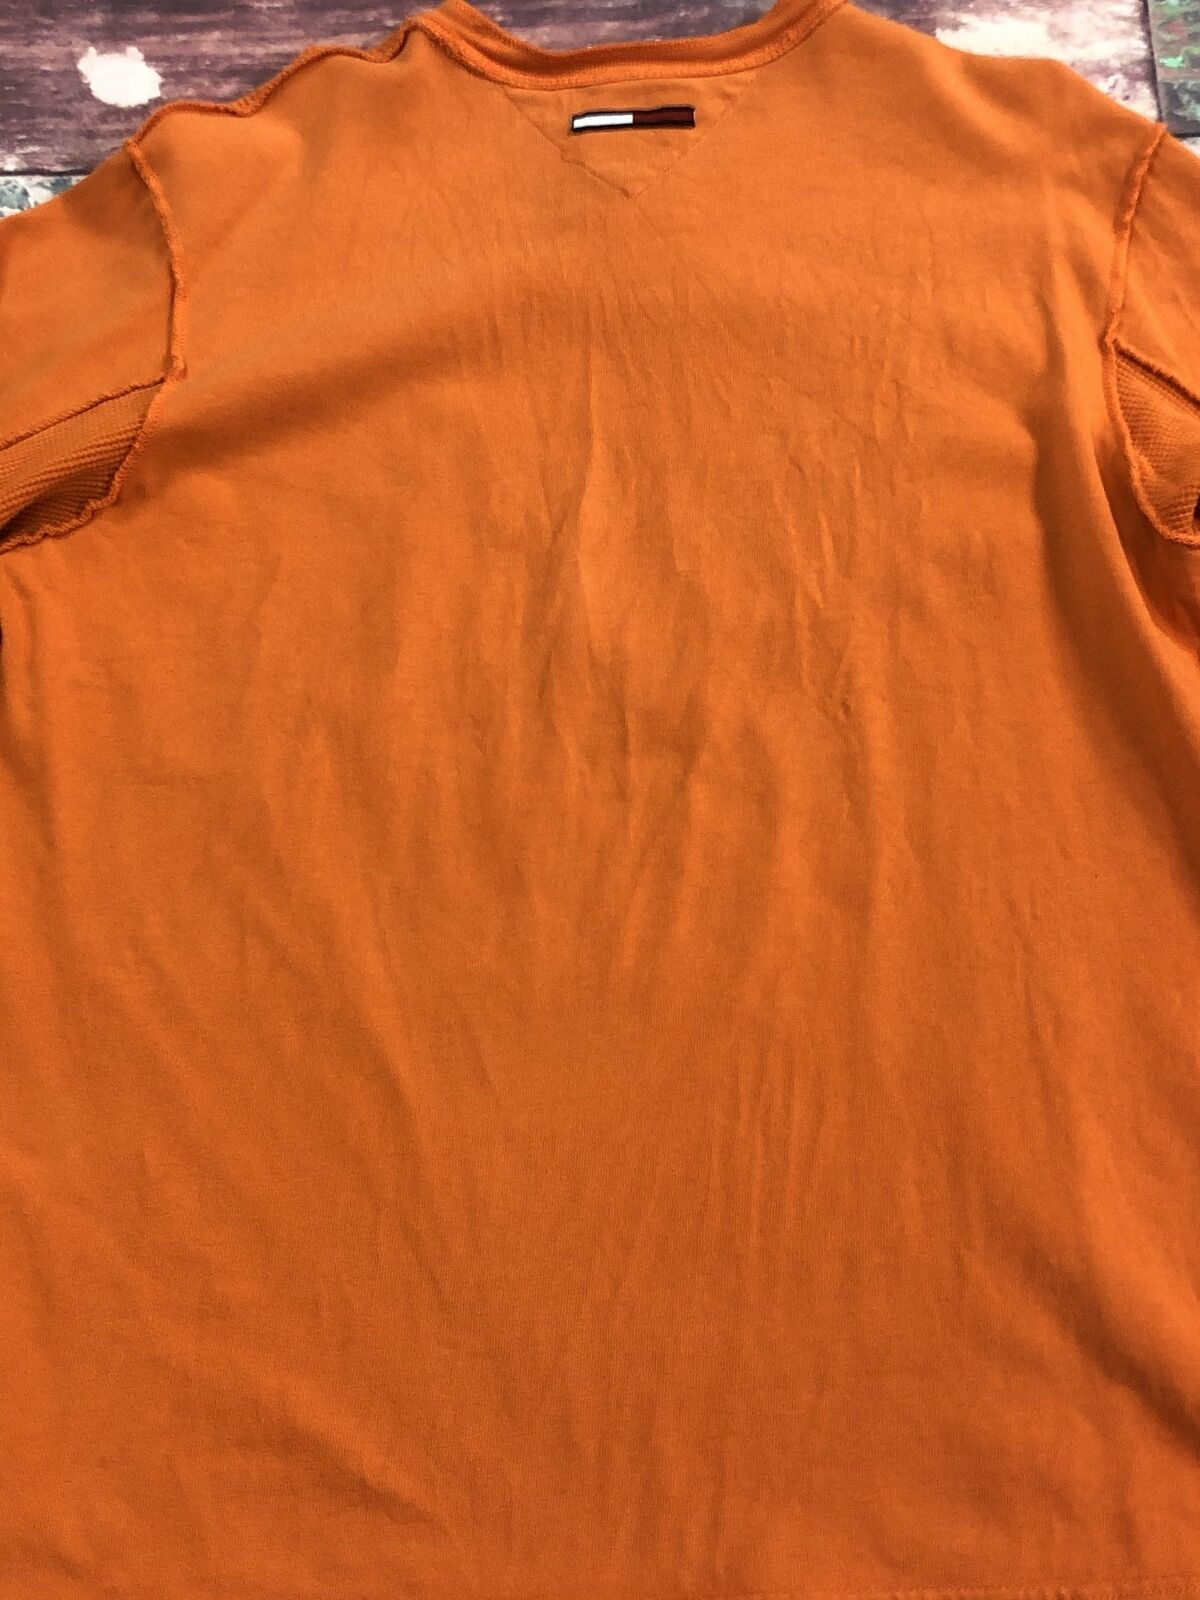 Vintage Men's T-Shirt - Orange - L